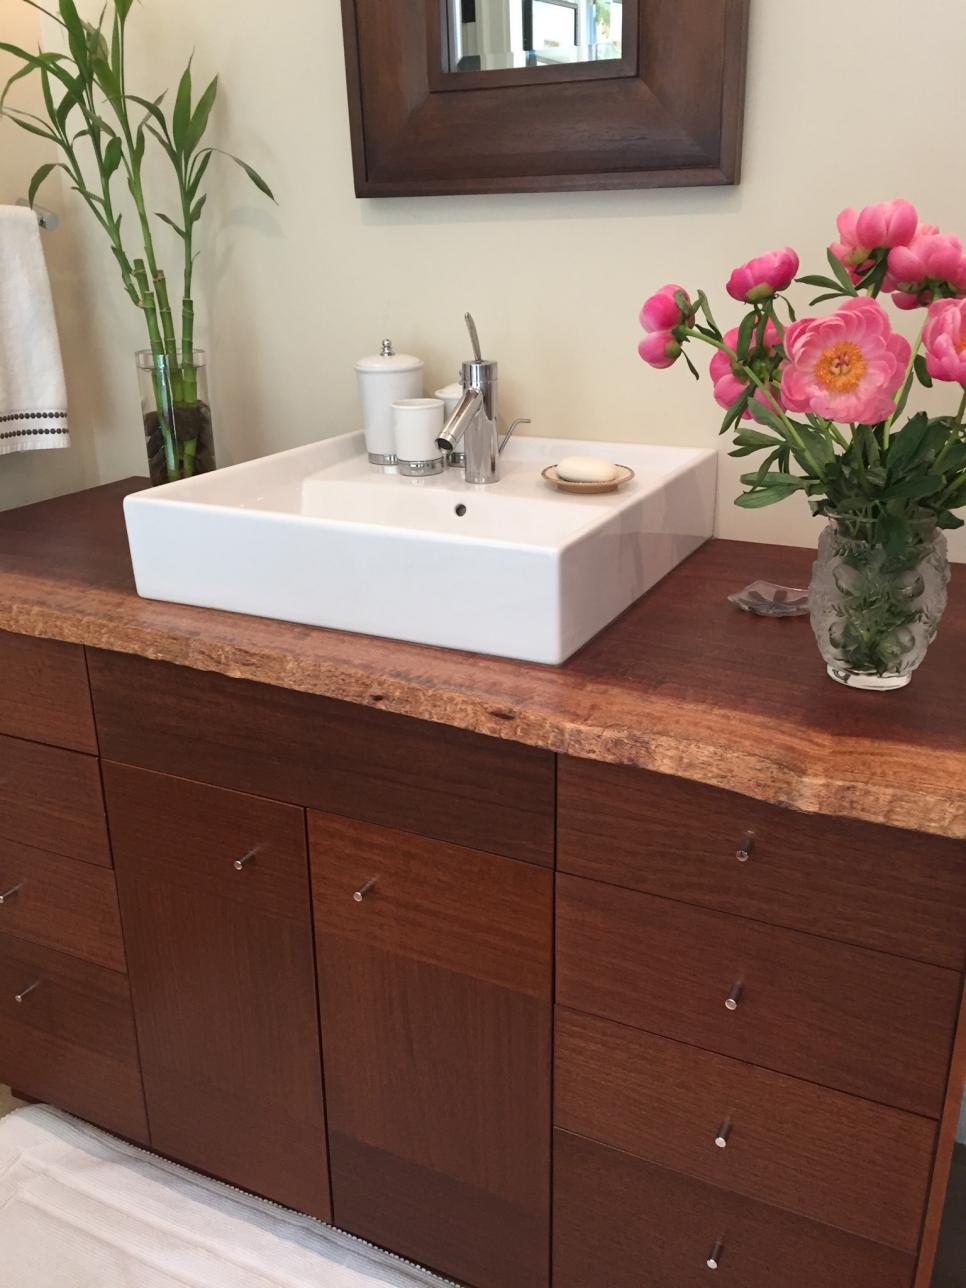 Rustic Bathroom Vanity With Live Edge Wood Countertop And White Vessel Sink Hgtv